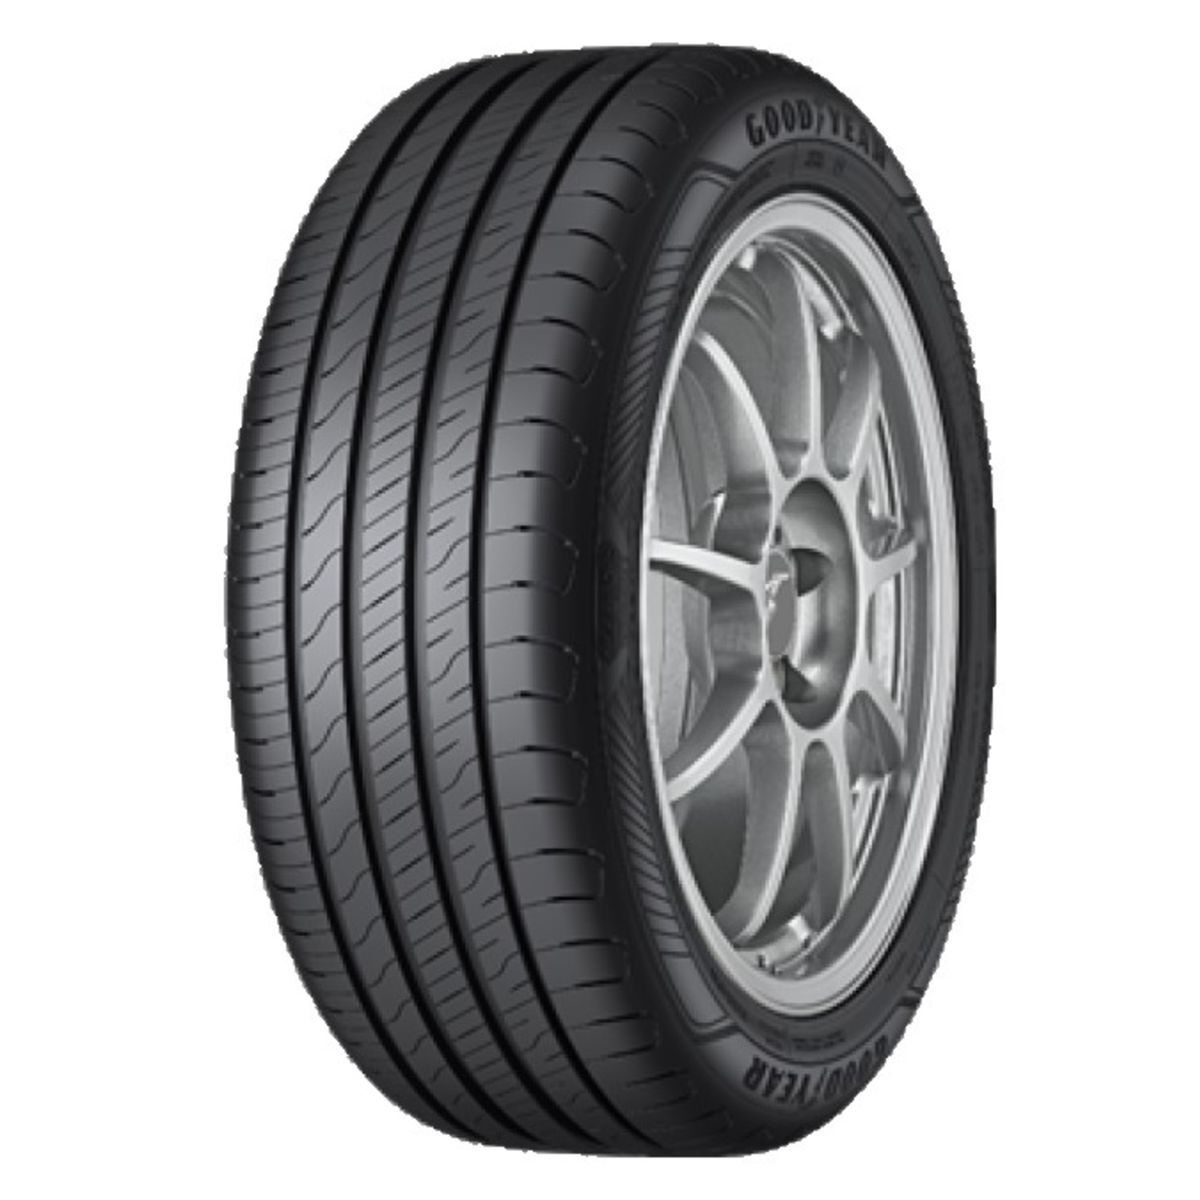 Neumáticos de verano GOODYEAR Efficientgrip Performance 2 205/55R17 XL 95V